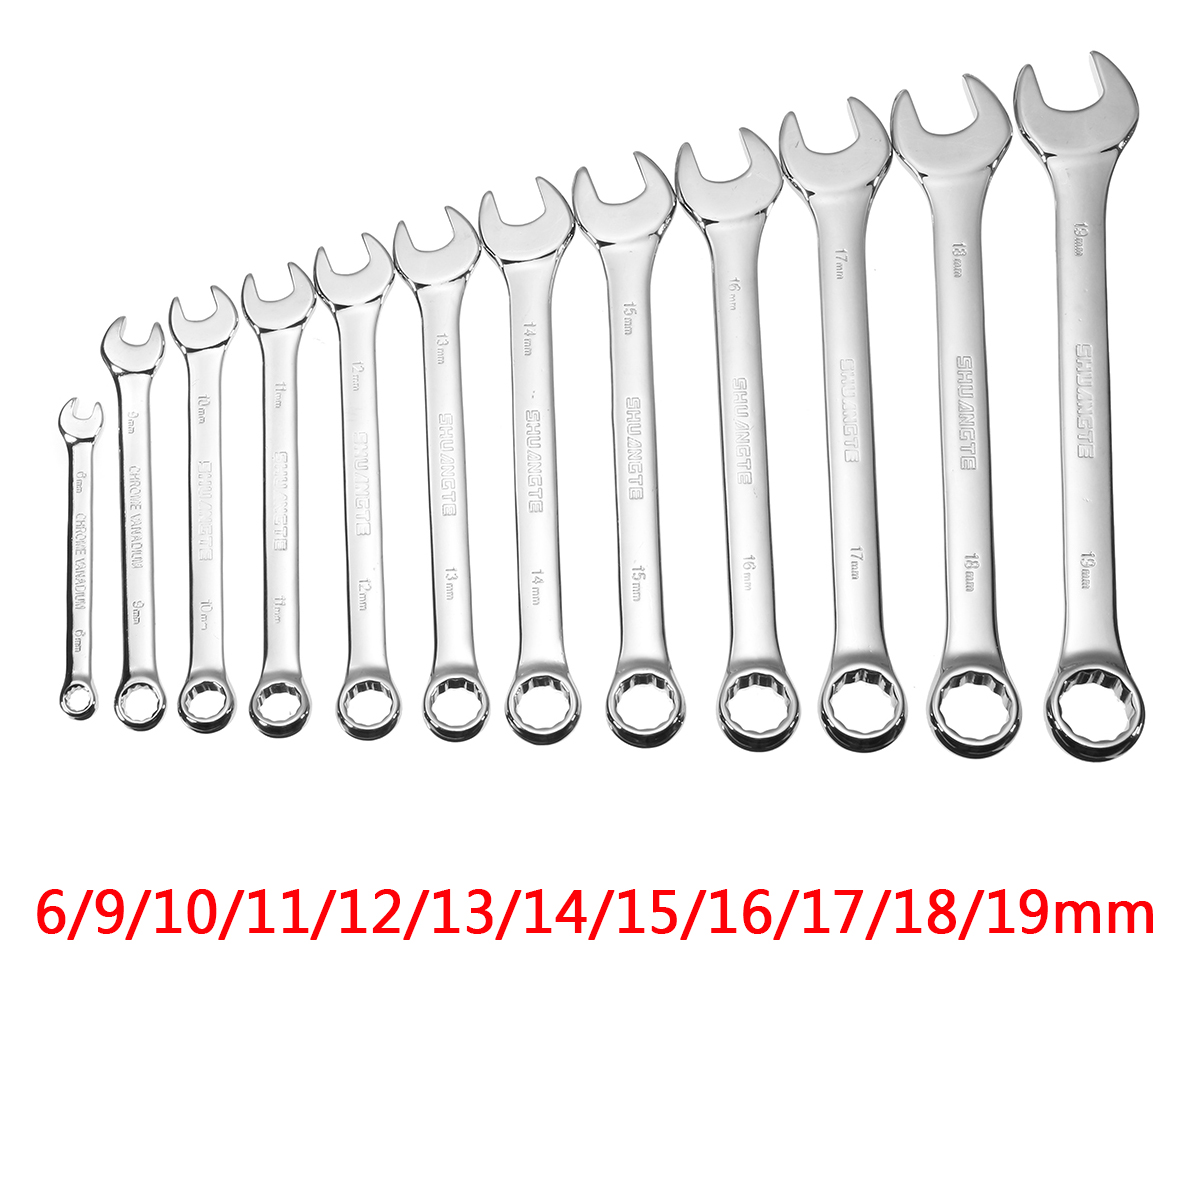 12pcs-Spanners-Wrench-Chrome-Vanadium-Steel-Polished-Tool-Set-Kit-6-19mm-1262792-6